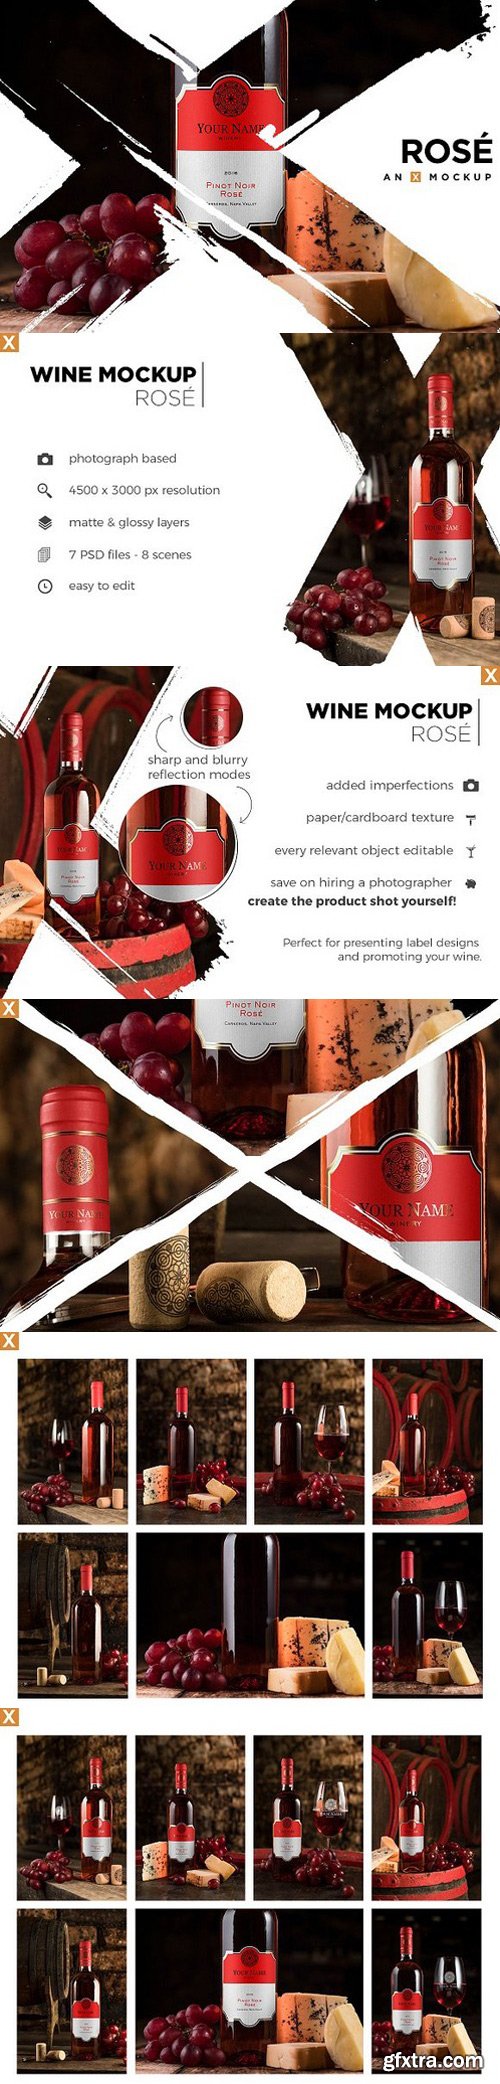 CM - Cellar Wine Mockup - Bordeaux Rose 1407461